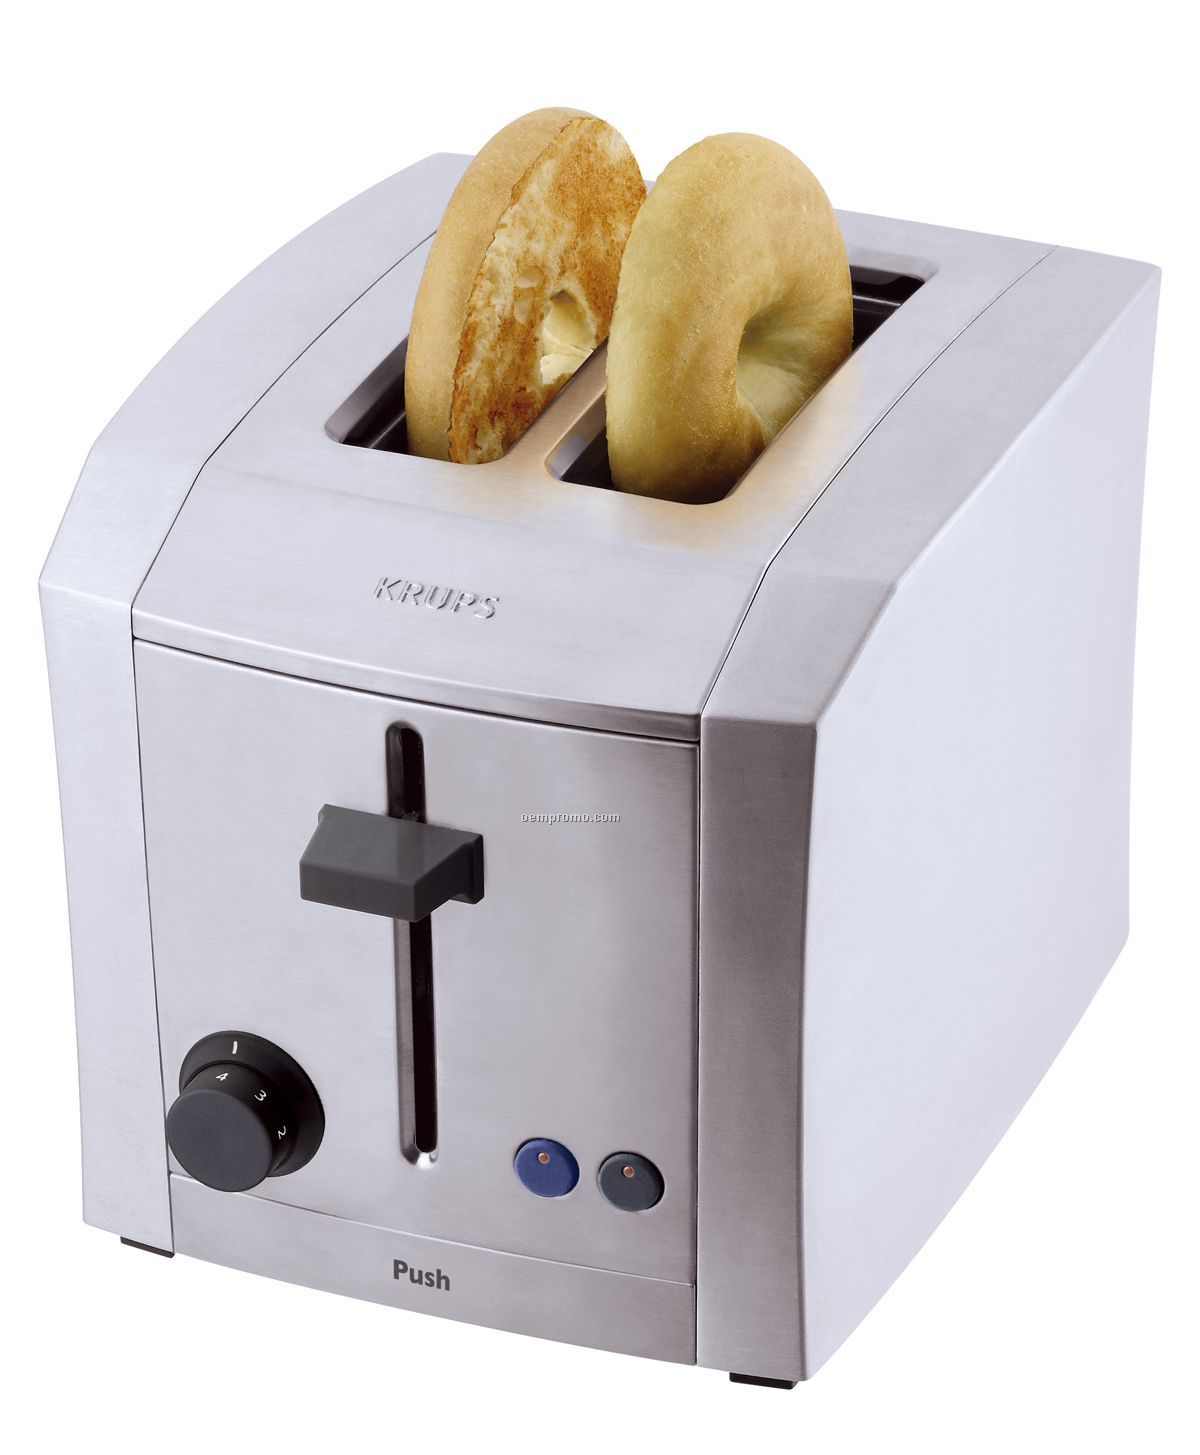 Krups Semi- Pro 2-slice Toaster (Stainless)